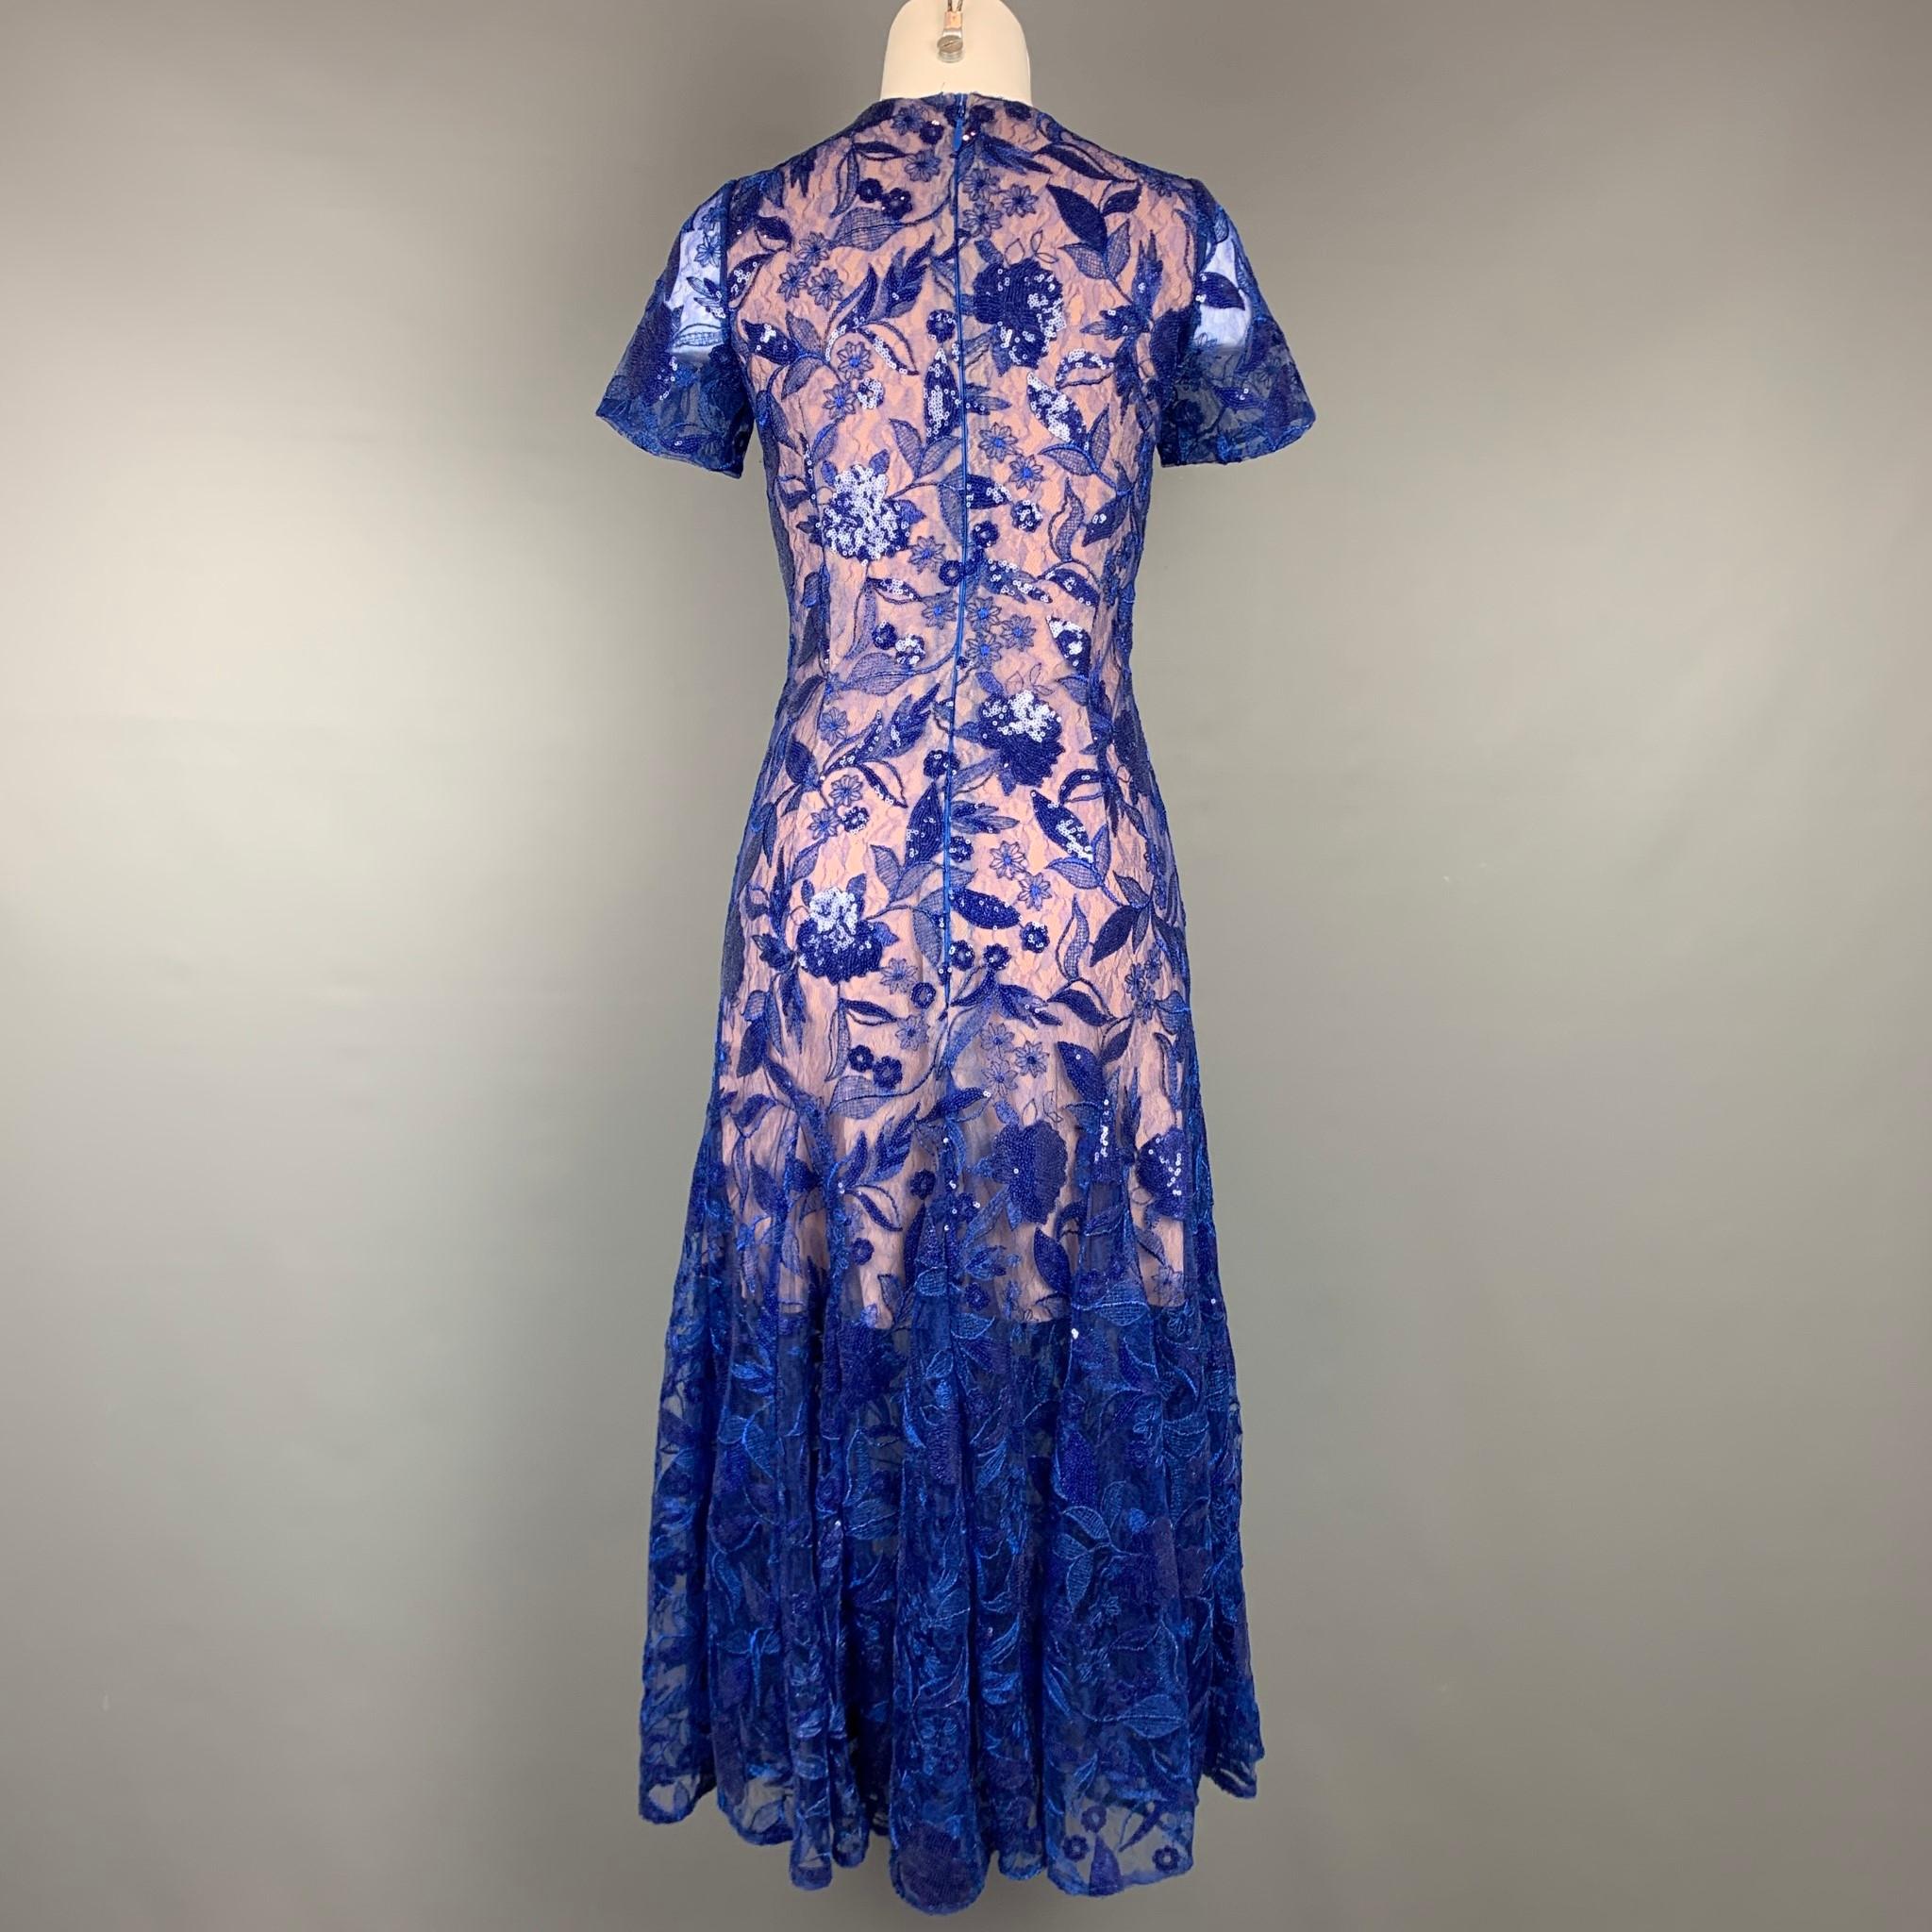 costarellos blue dress